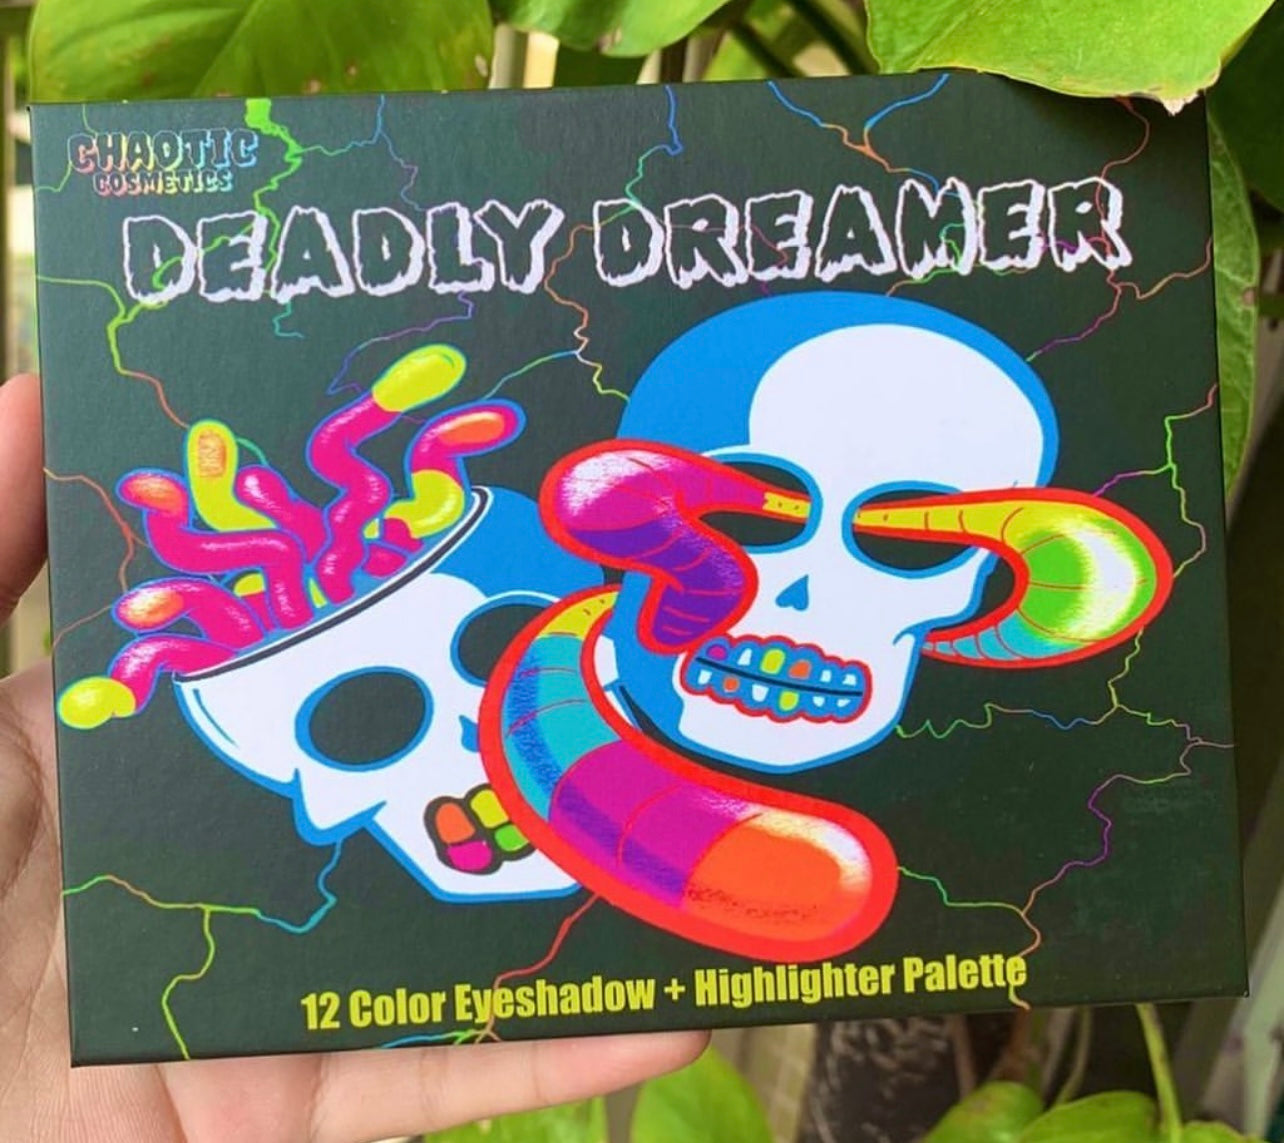 Deadly Dreamer 3D Eyeshadow + Highlighter Palette